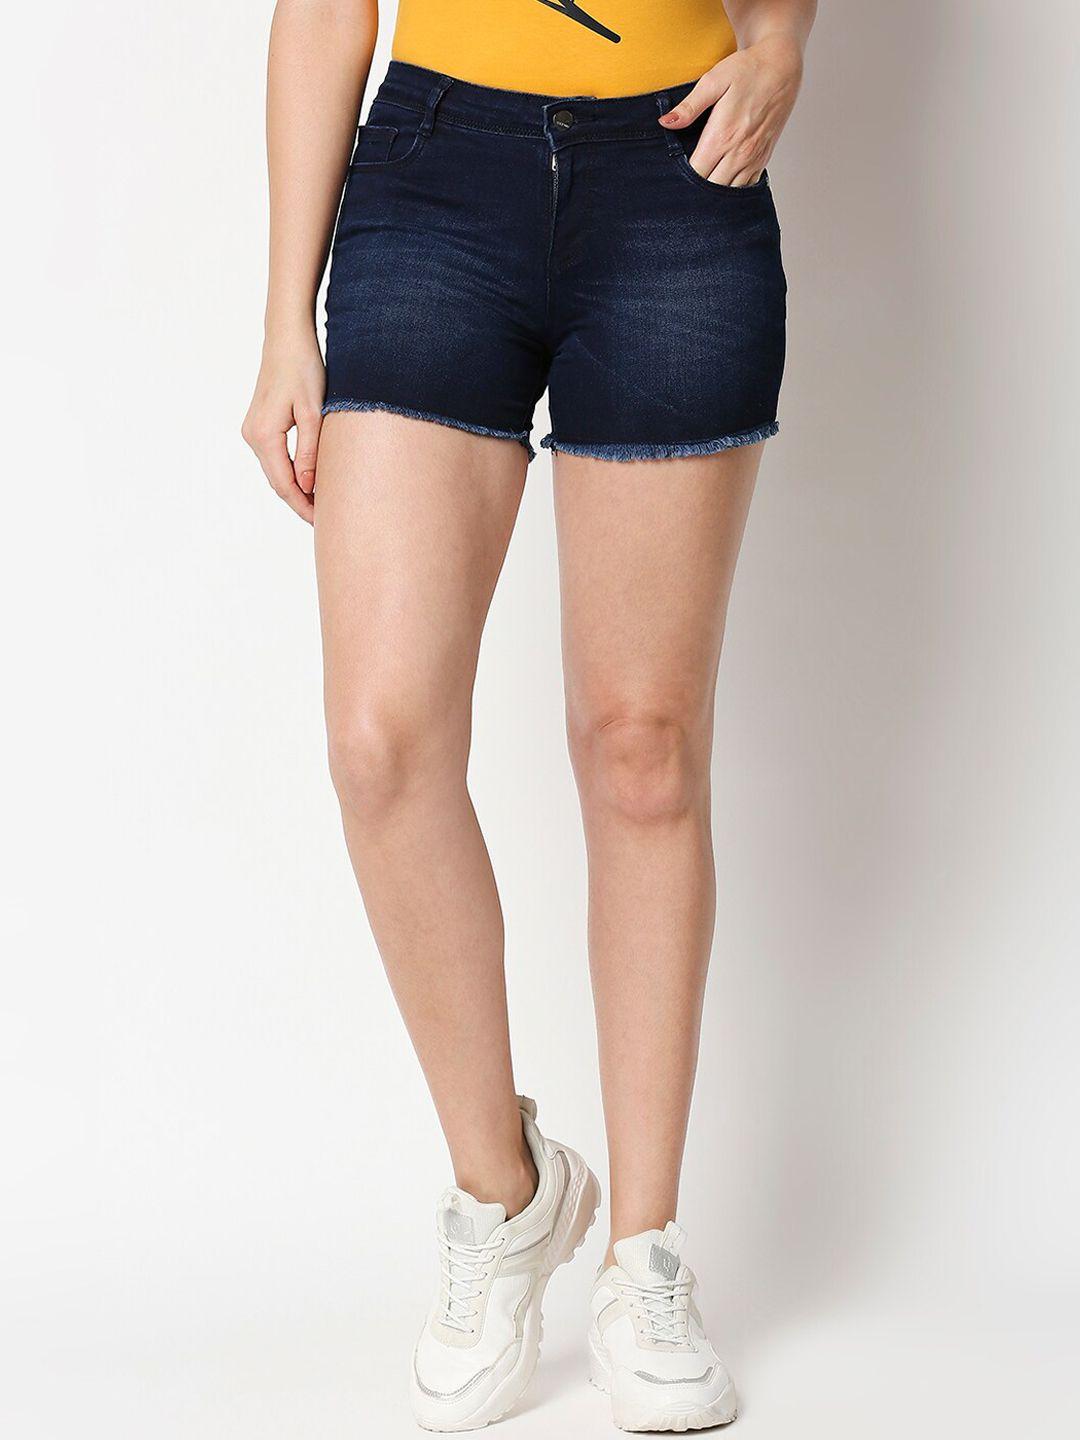 kraus-jeans-women-blue-washed-washed-slim-fit-high-rise-cotton-denim-shorts